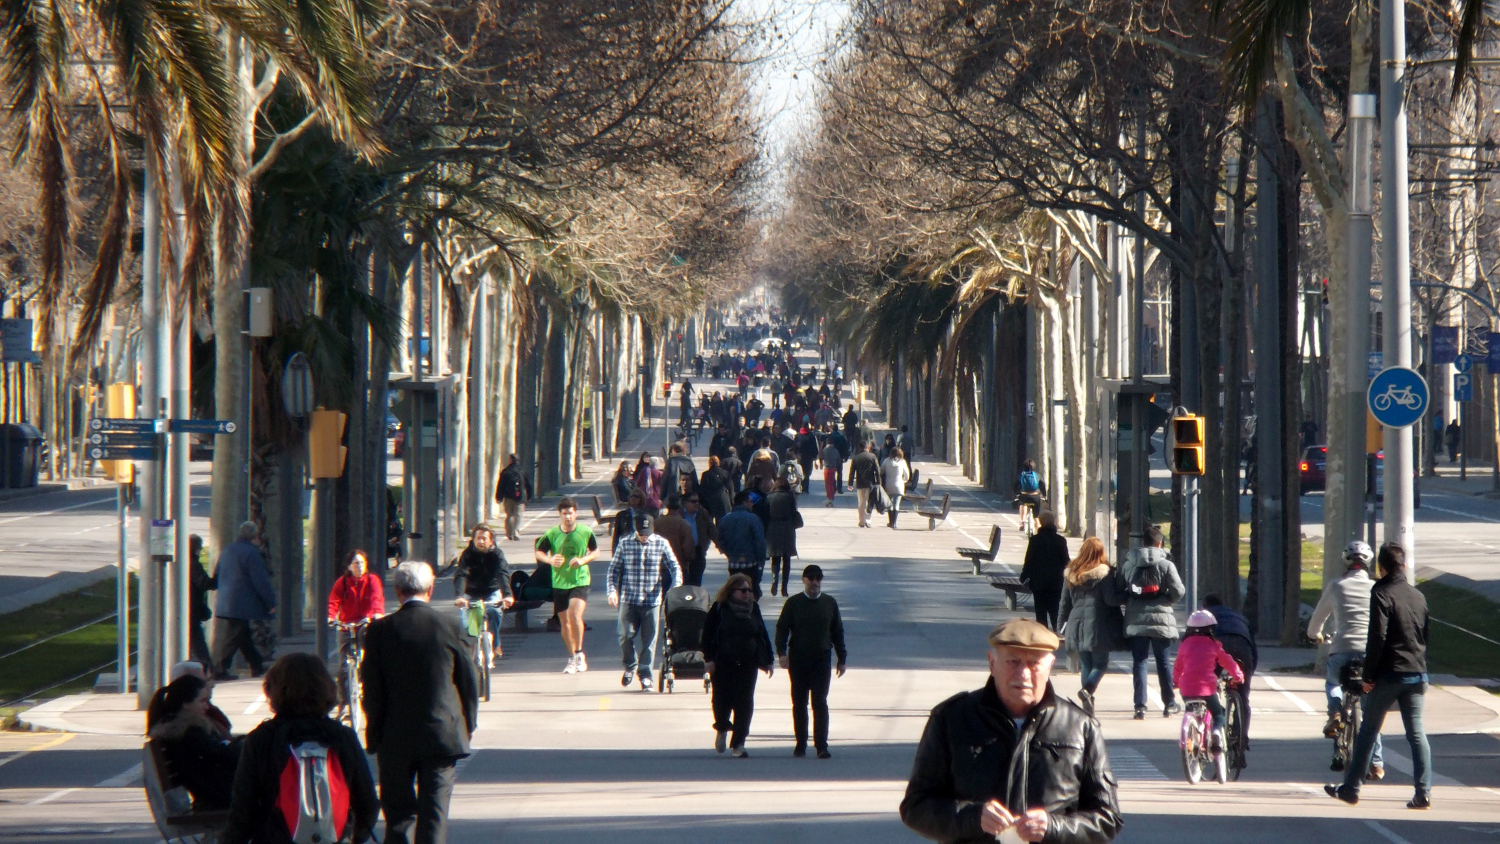 Where the well-heeled come to spend big bucks: Avinguda Diagonal, La Zona Alta. Image by oatsy40 / CC BY 2.0